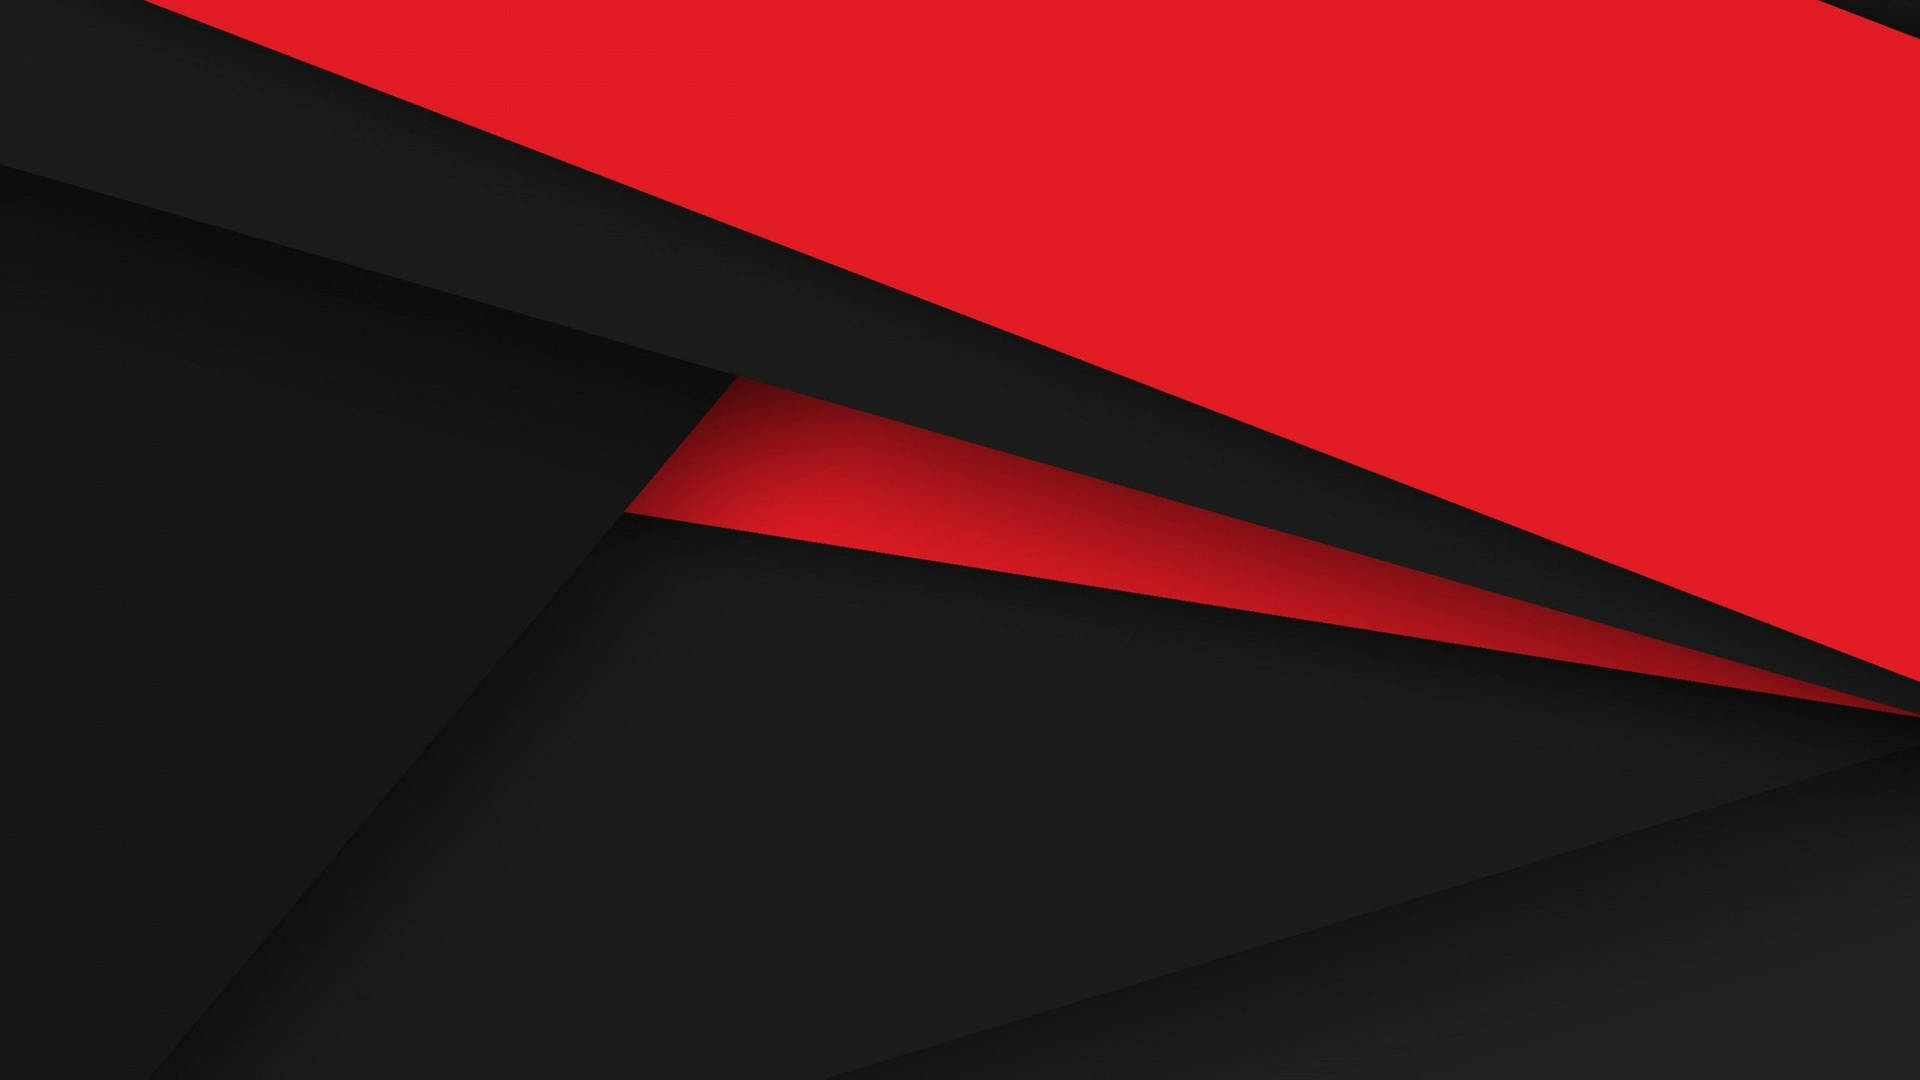 Minimalist Red And Black Geometric Background